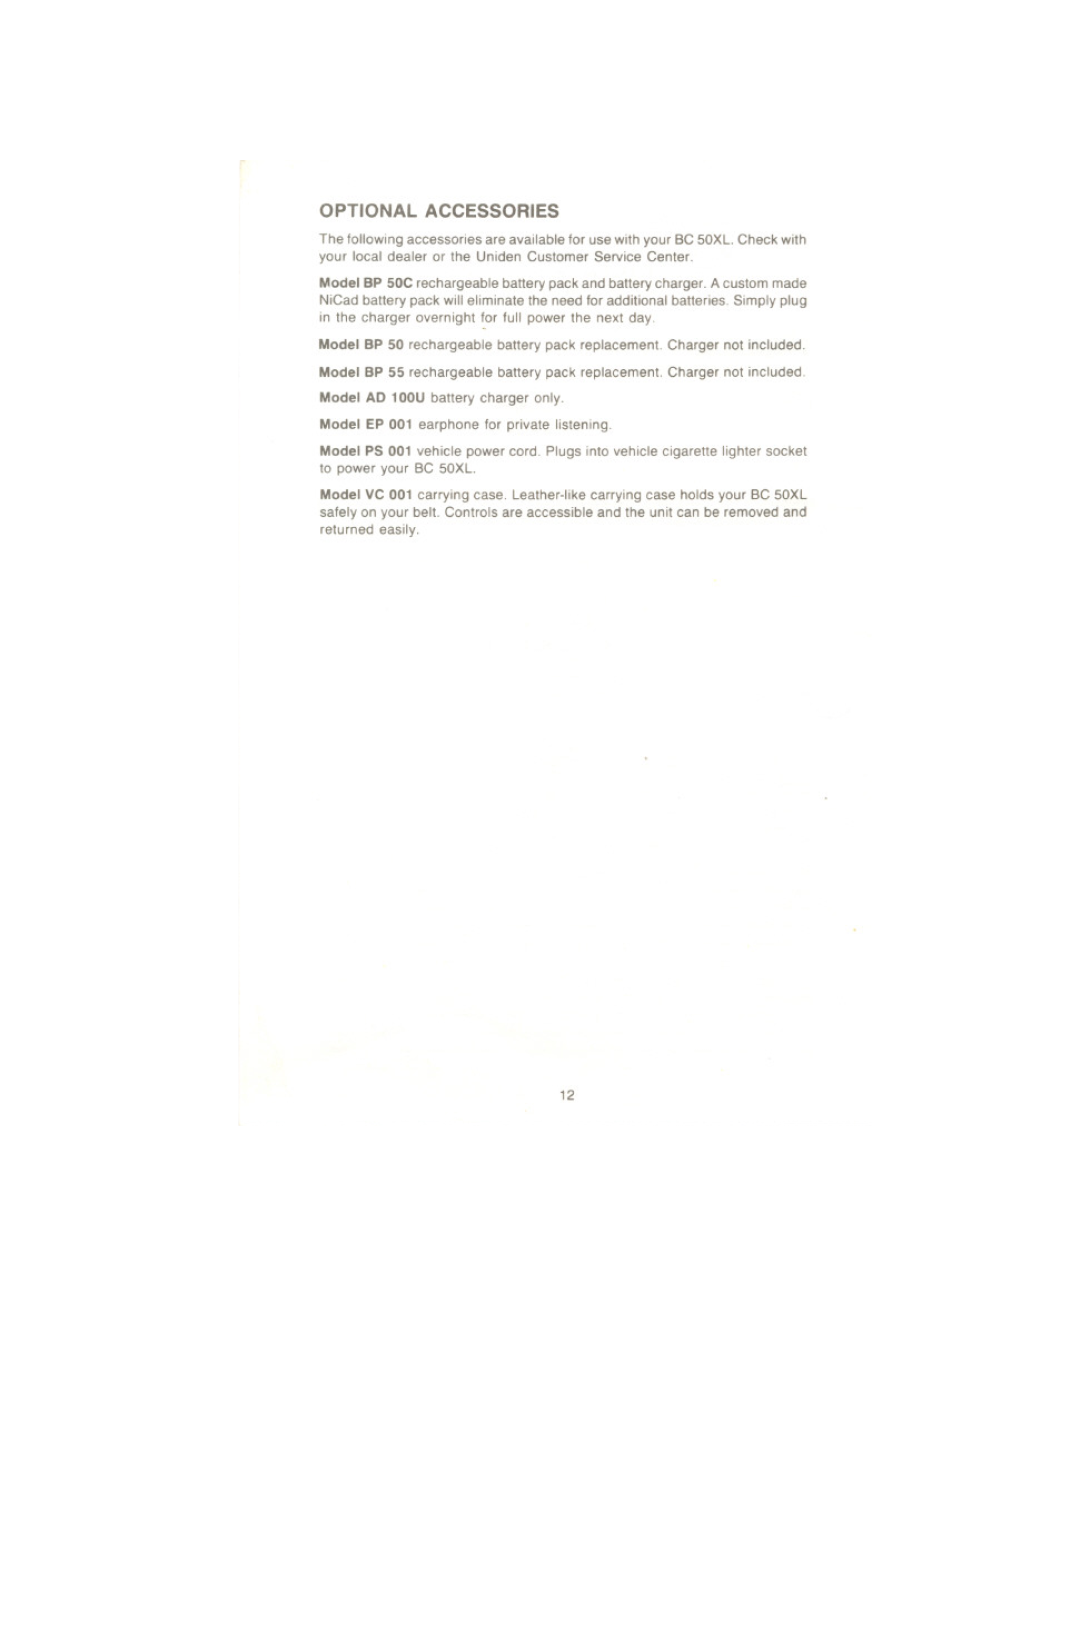 Uniden BC 50XL manual Optional Accessories 